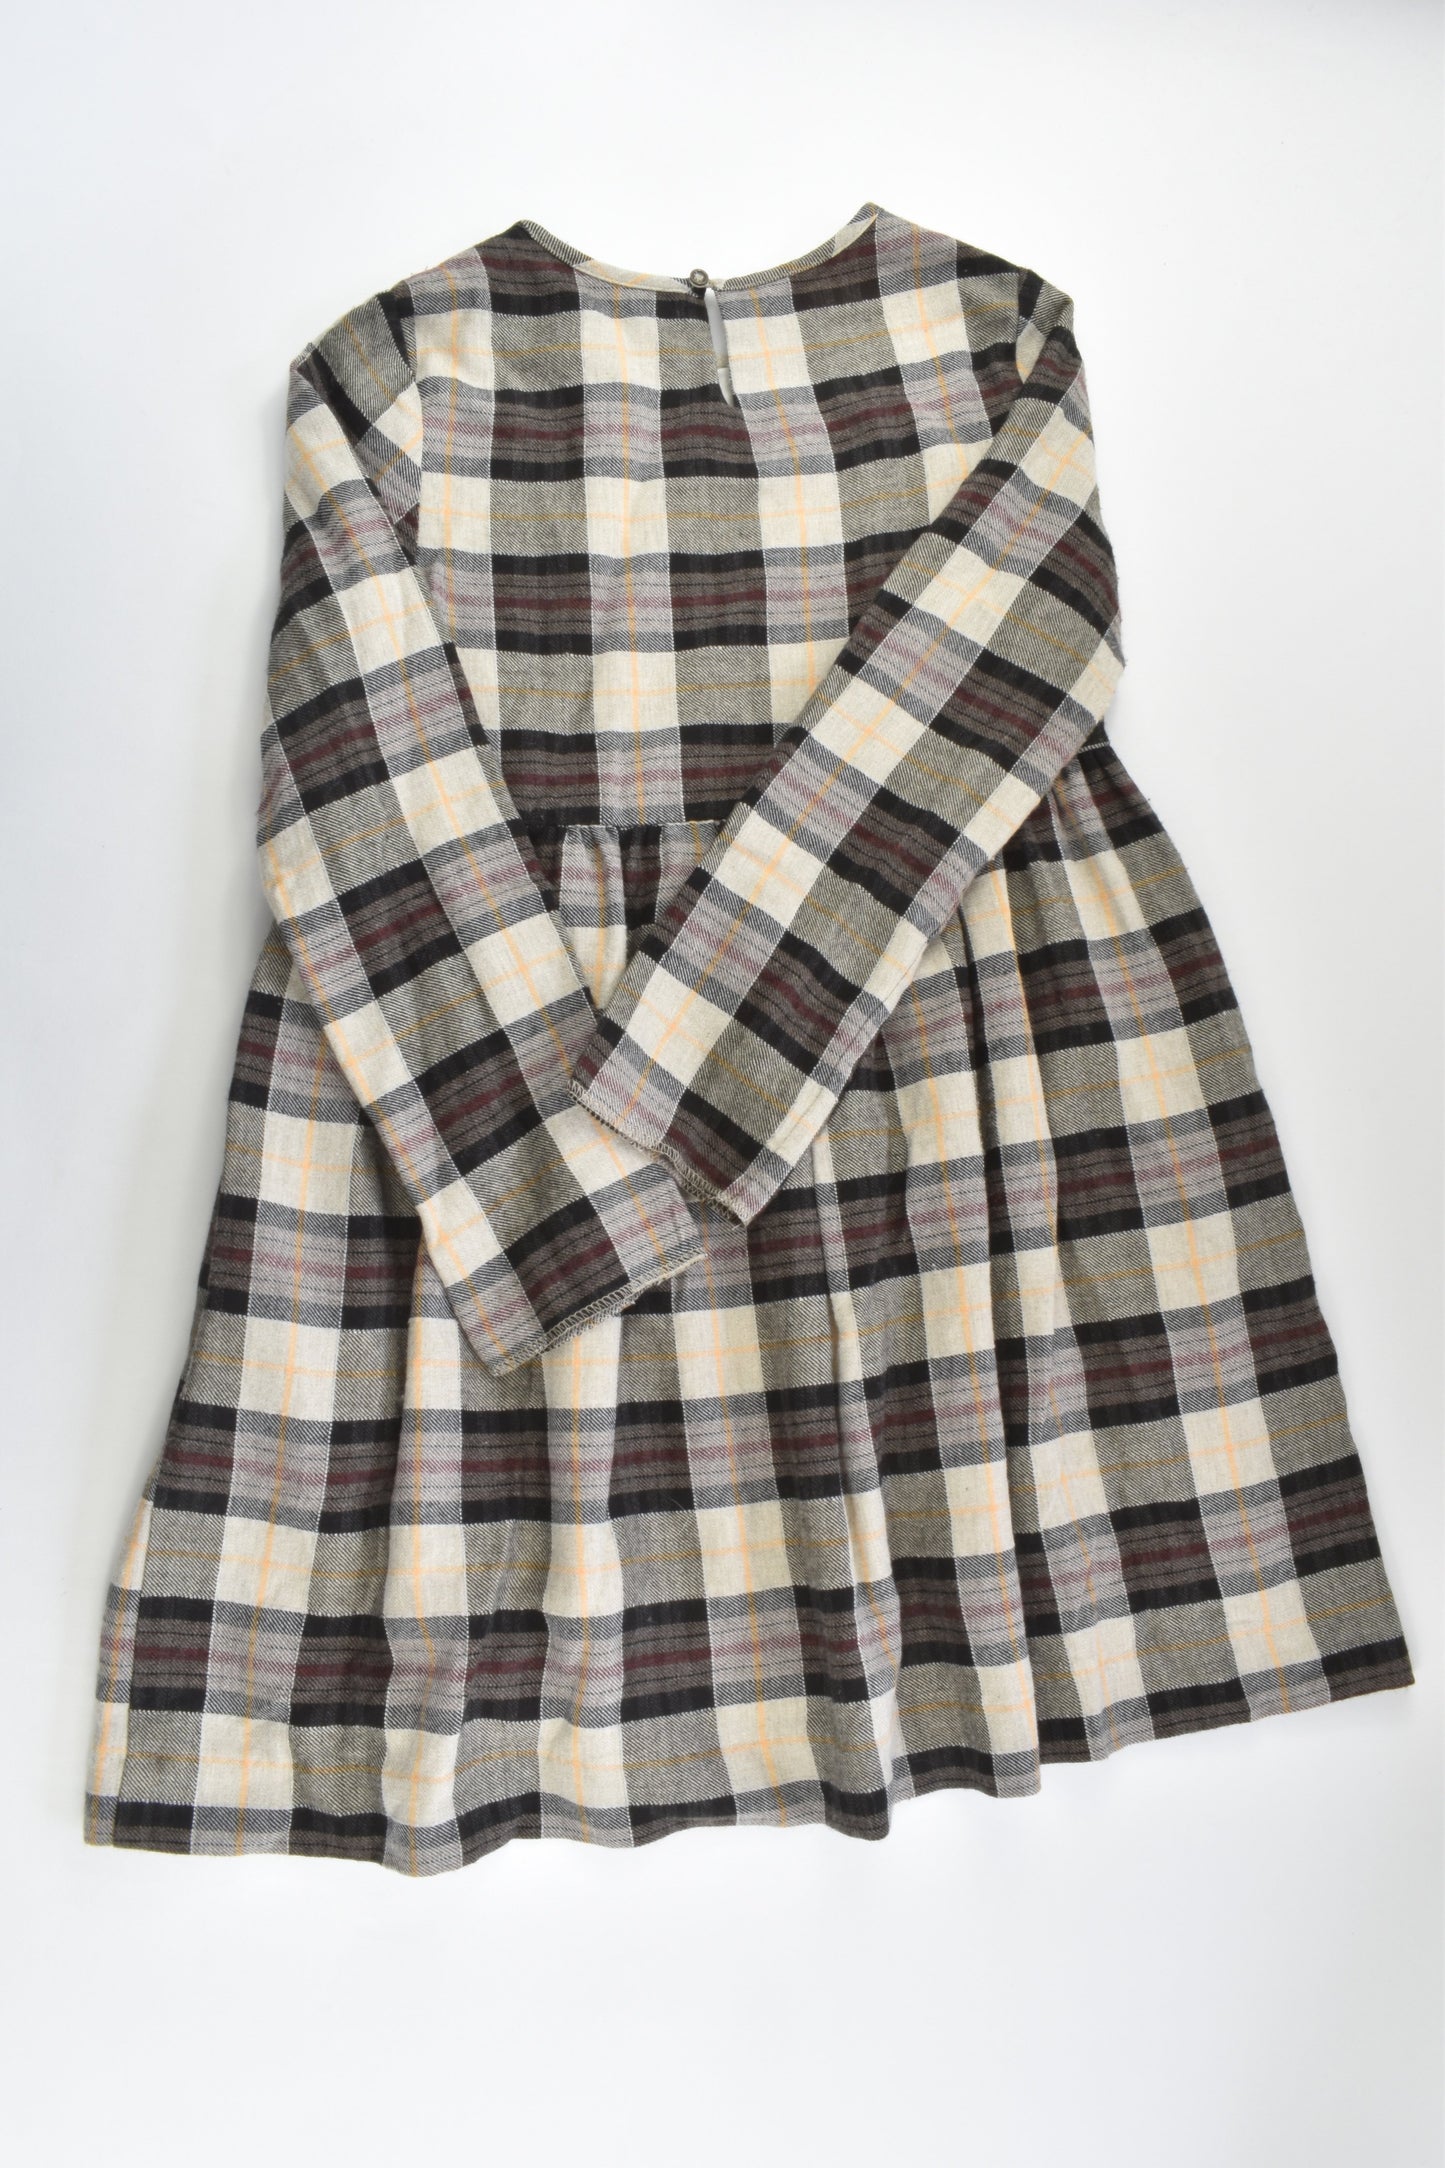 Zara Size 9/10 (140 cm) Checked Lined Winter Dress